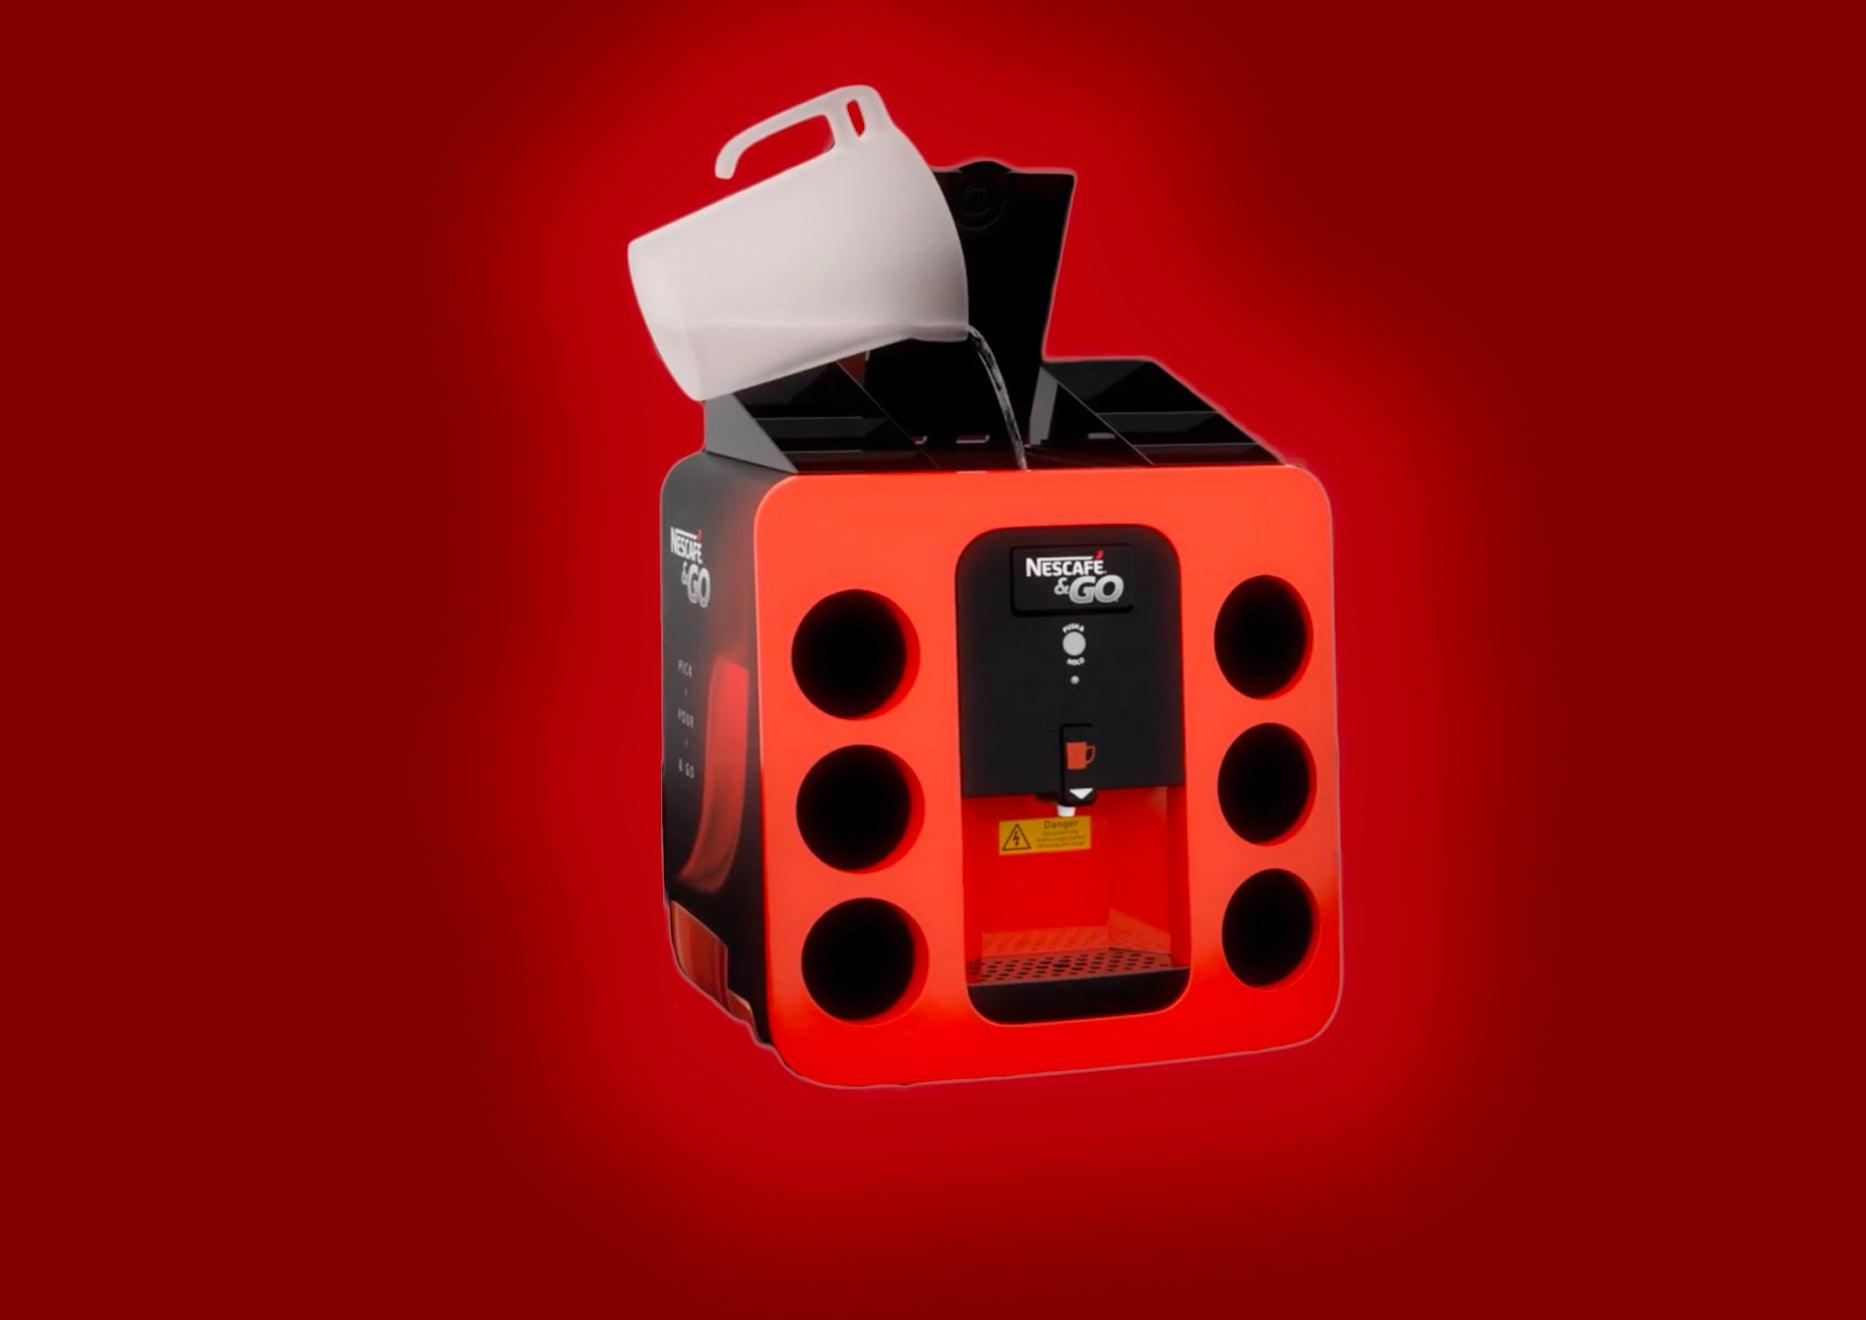 Nescafe &amp; Go Machine Coffee Machine for Small Business - Vending Superstore